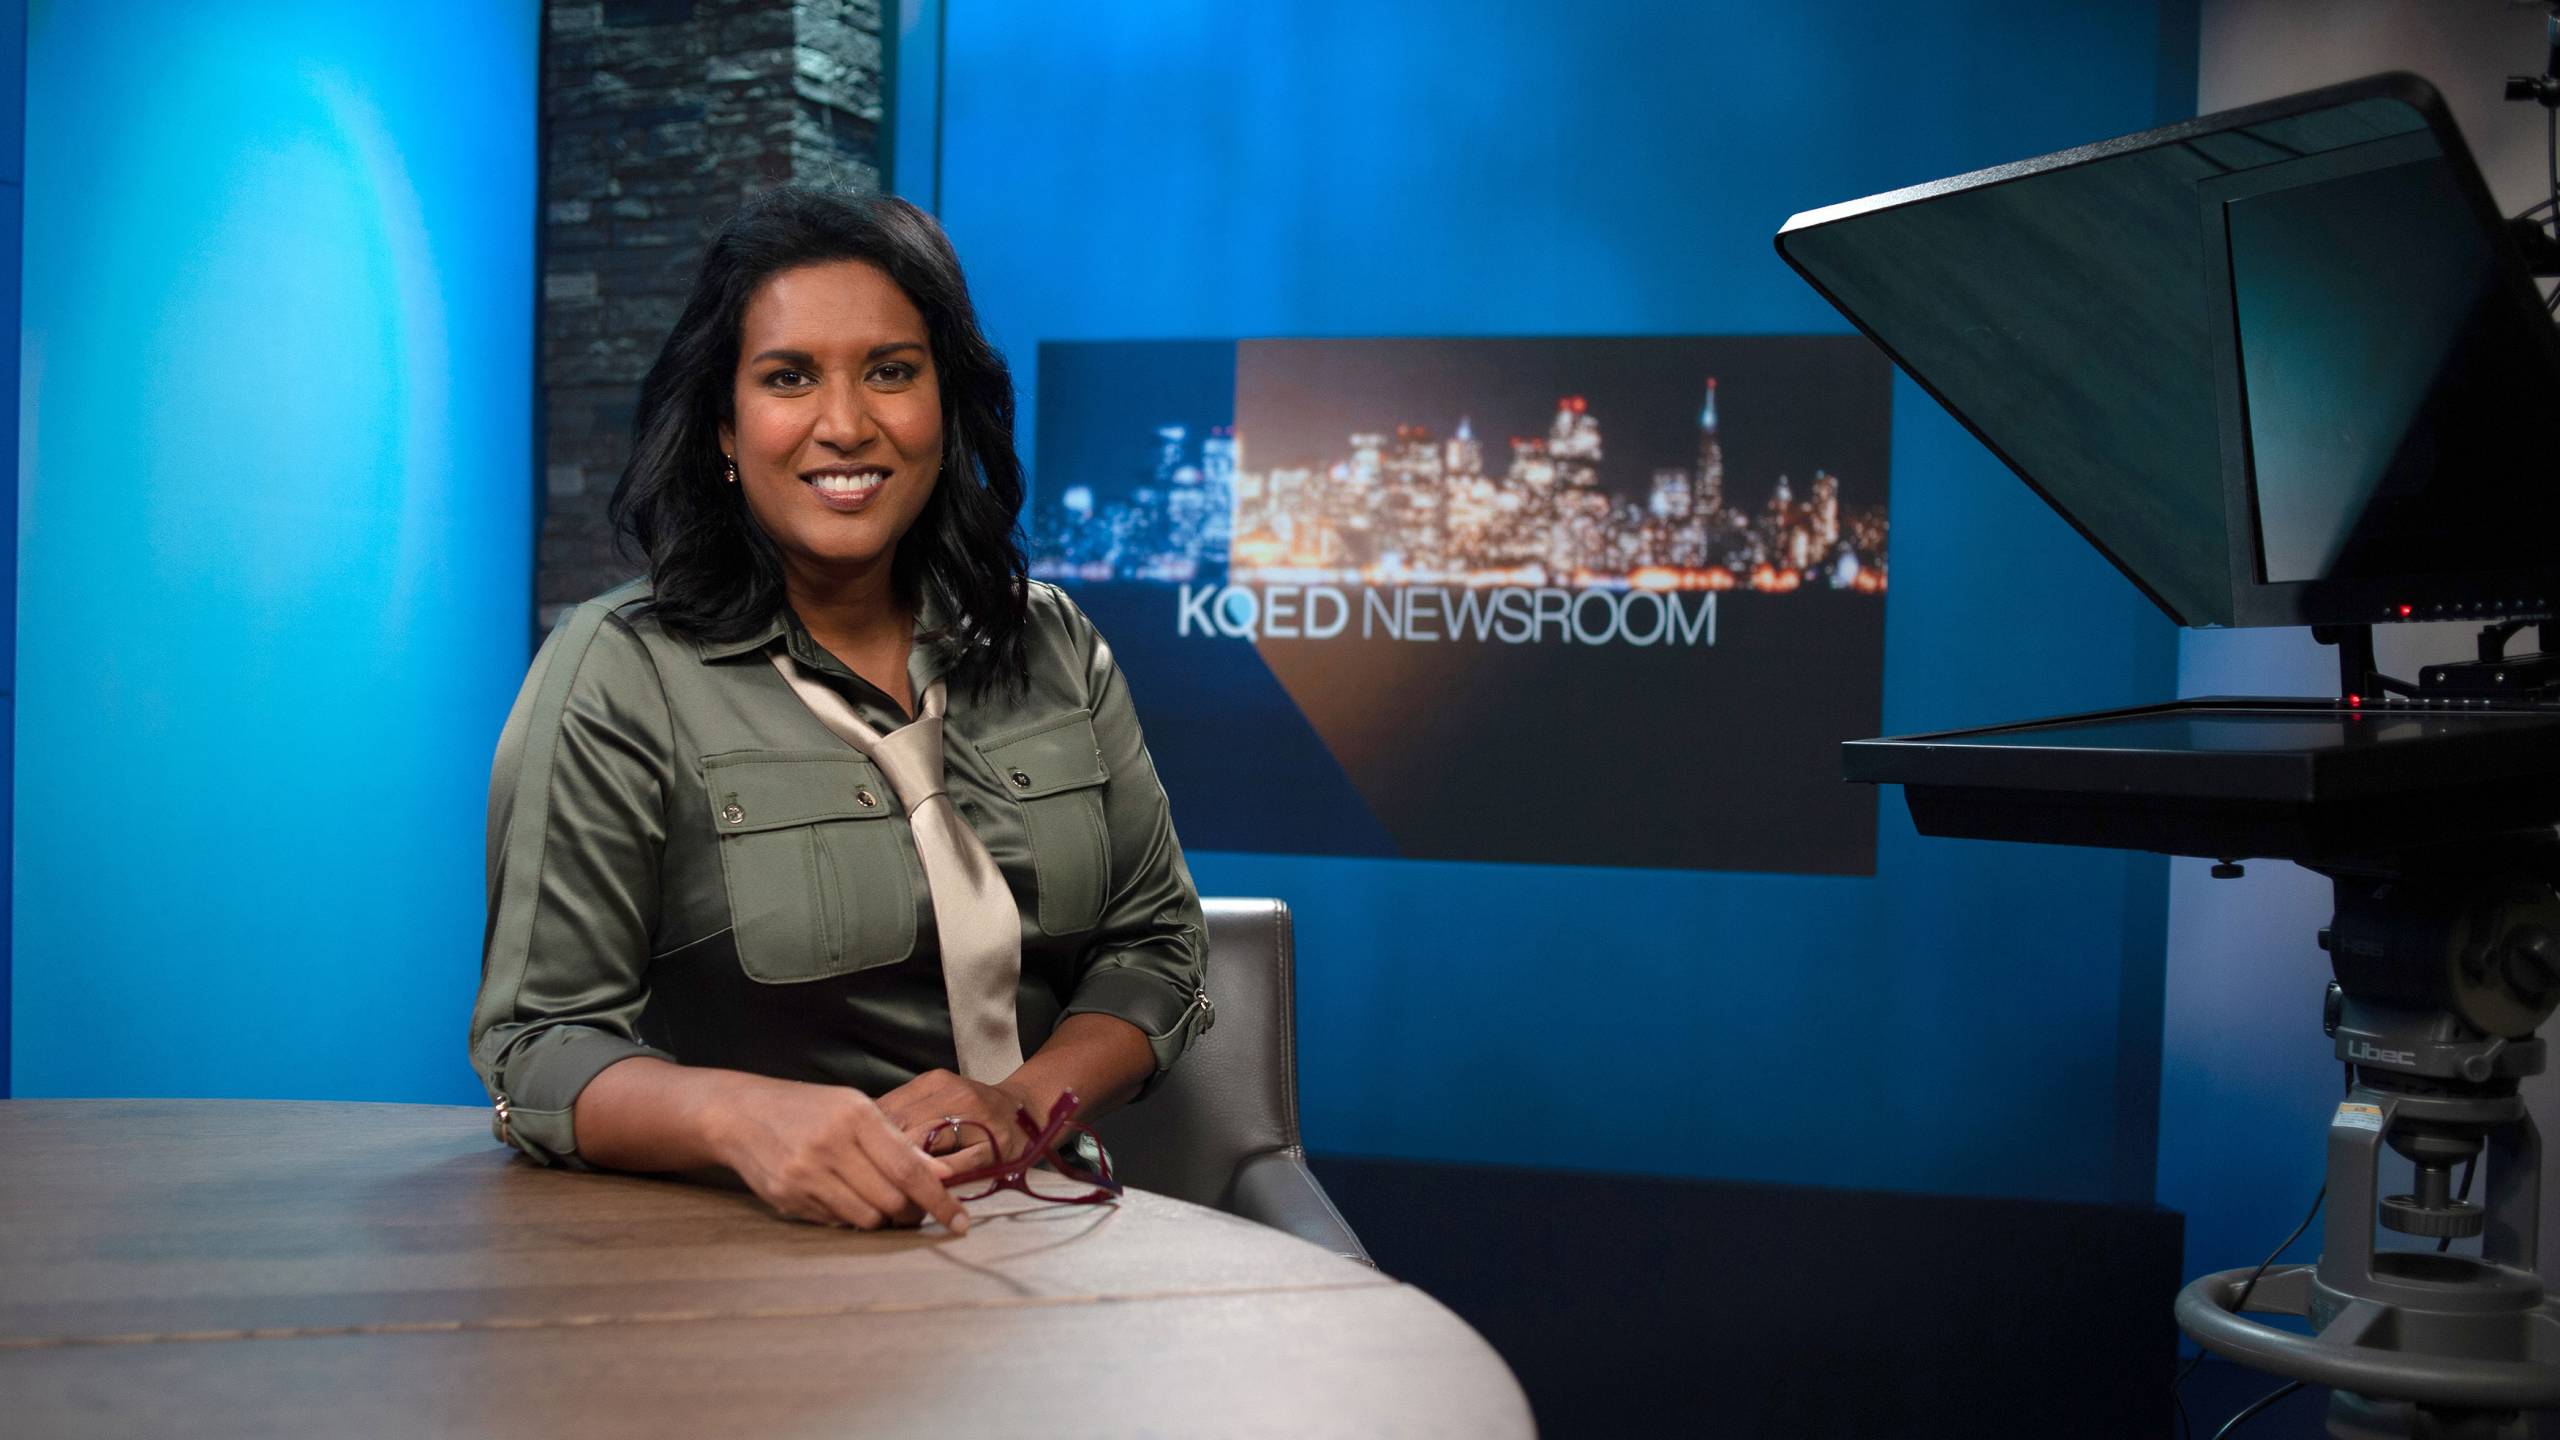 Priya David Clemens on the KQED Newsroom set